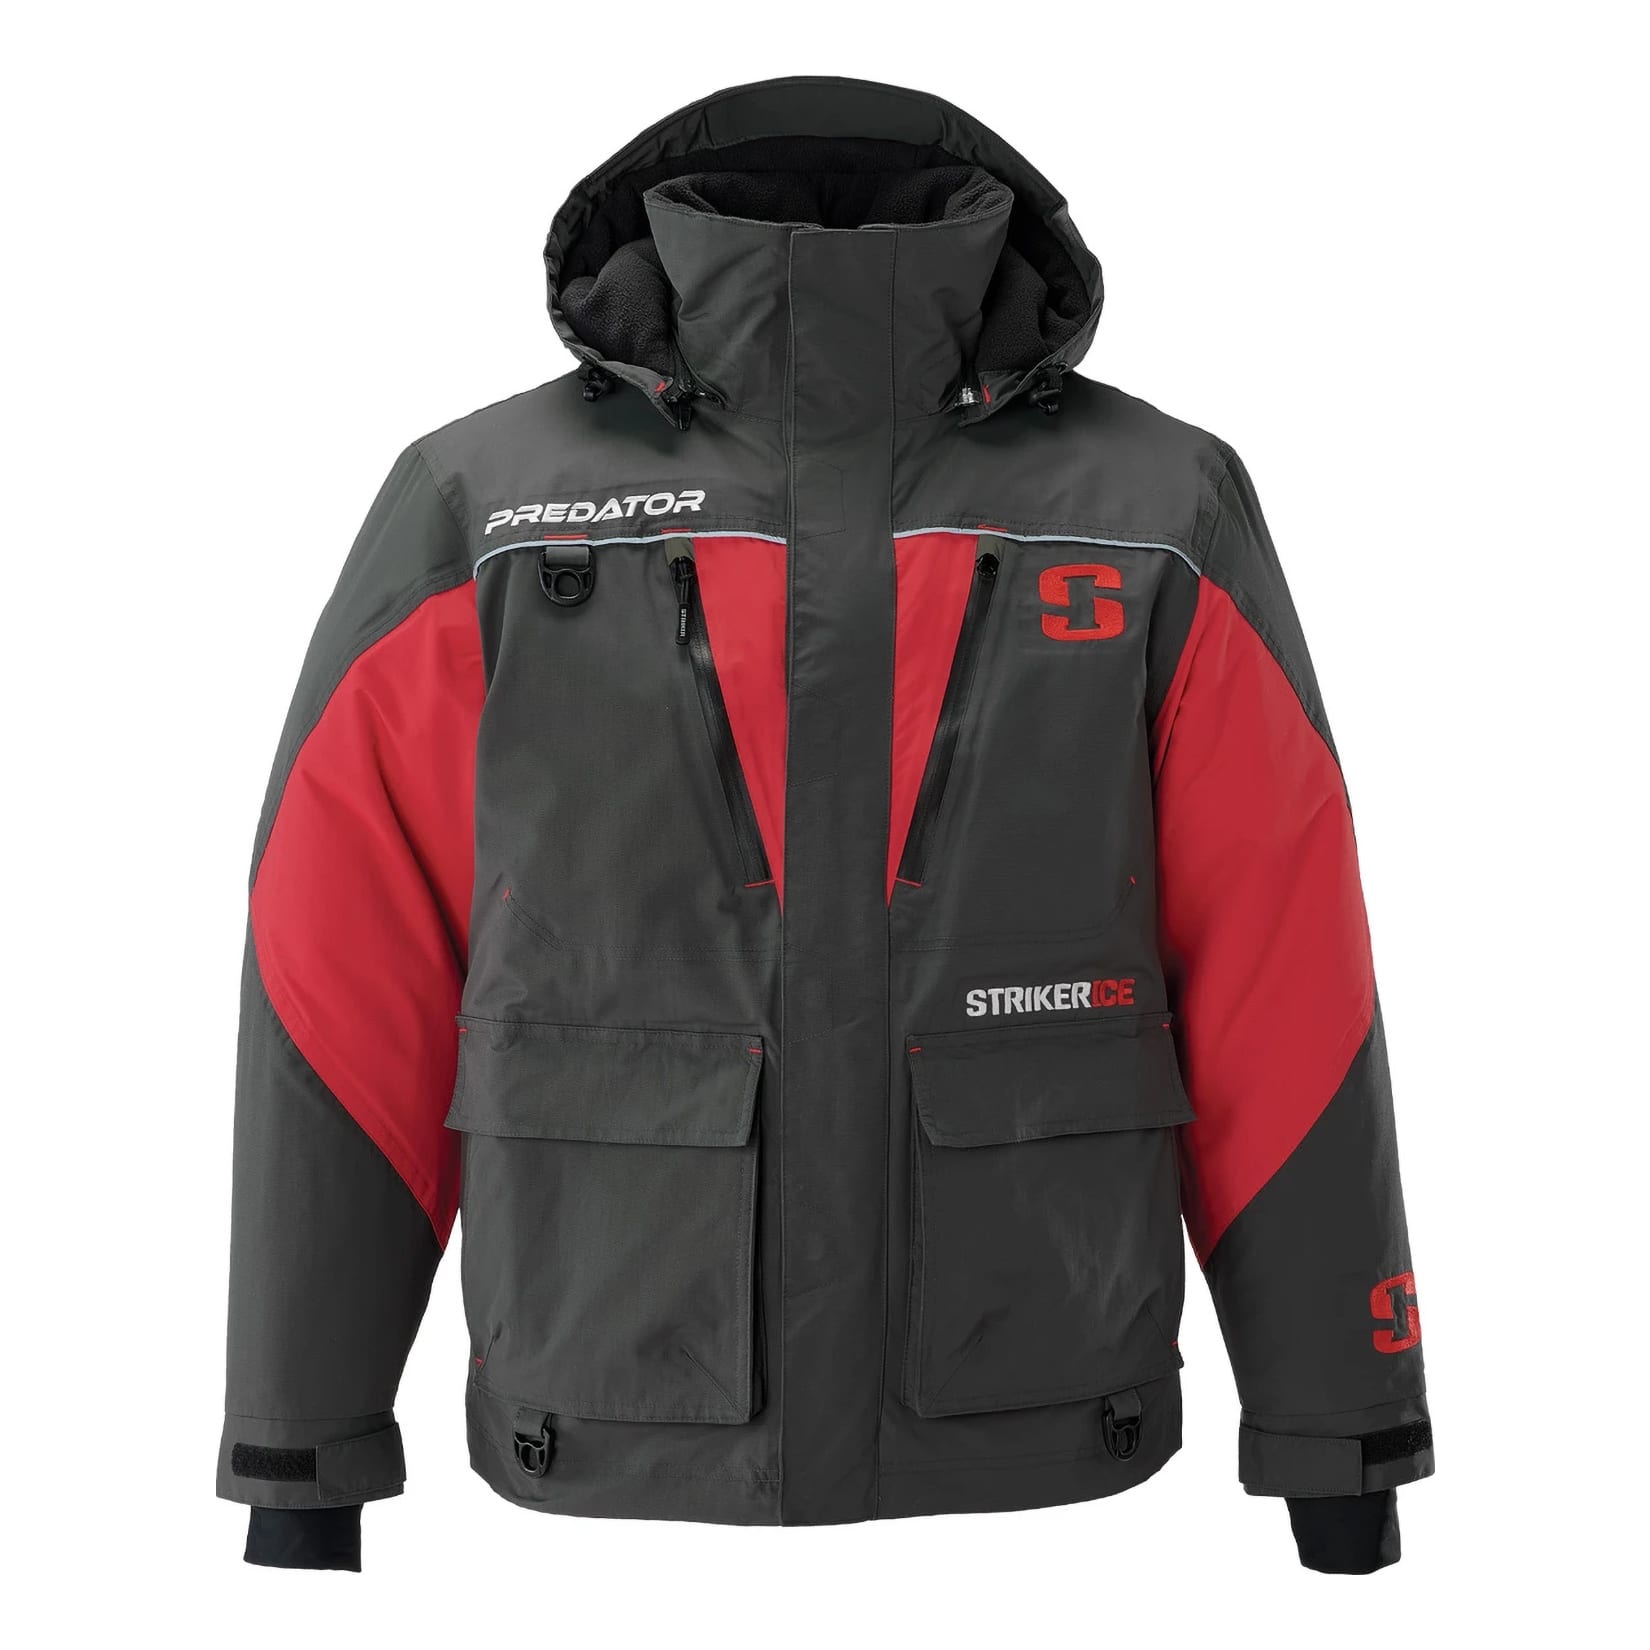 Striker® Men’s Predator Jacket - Charcoal/Red